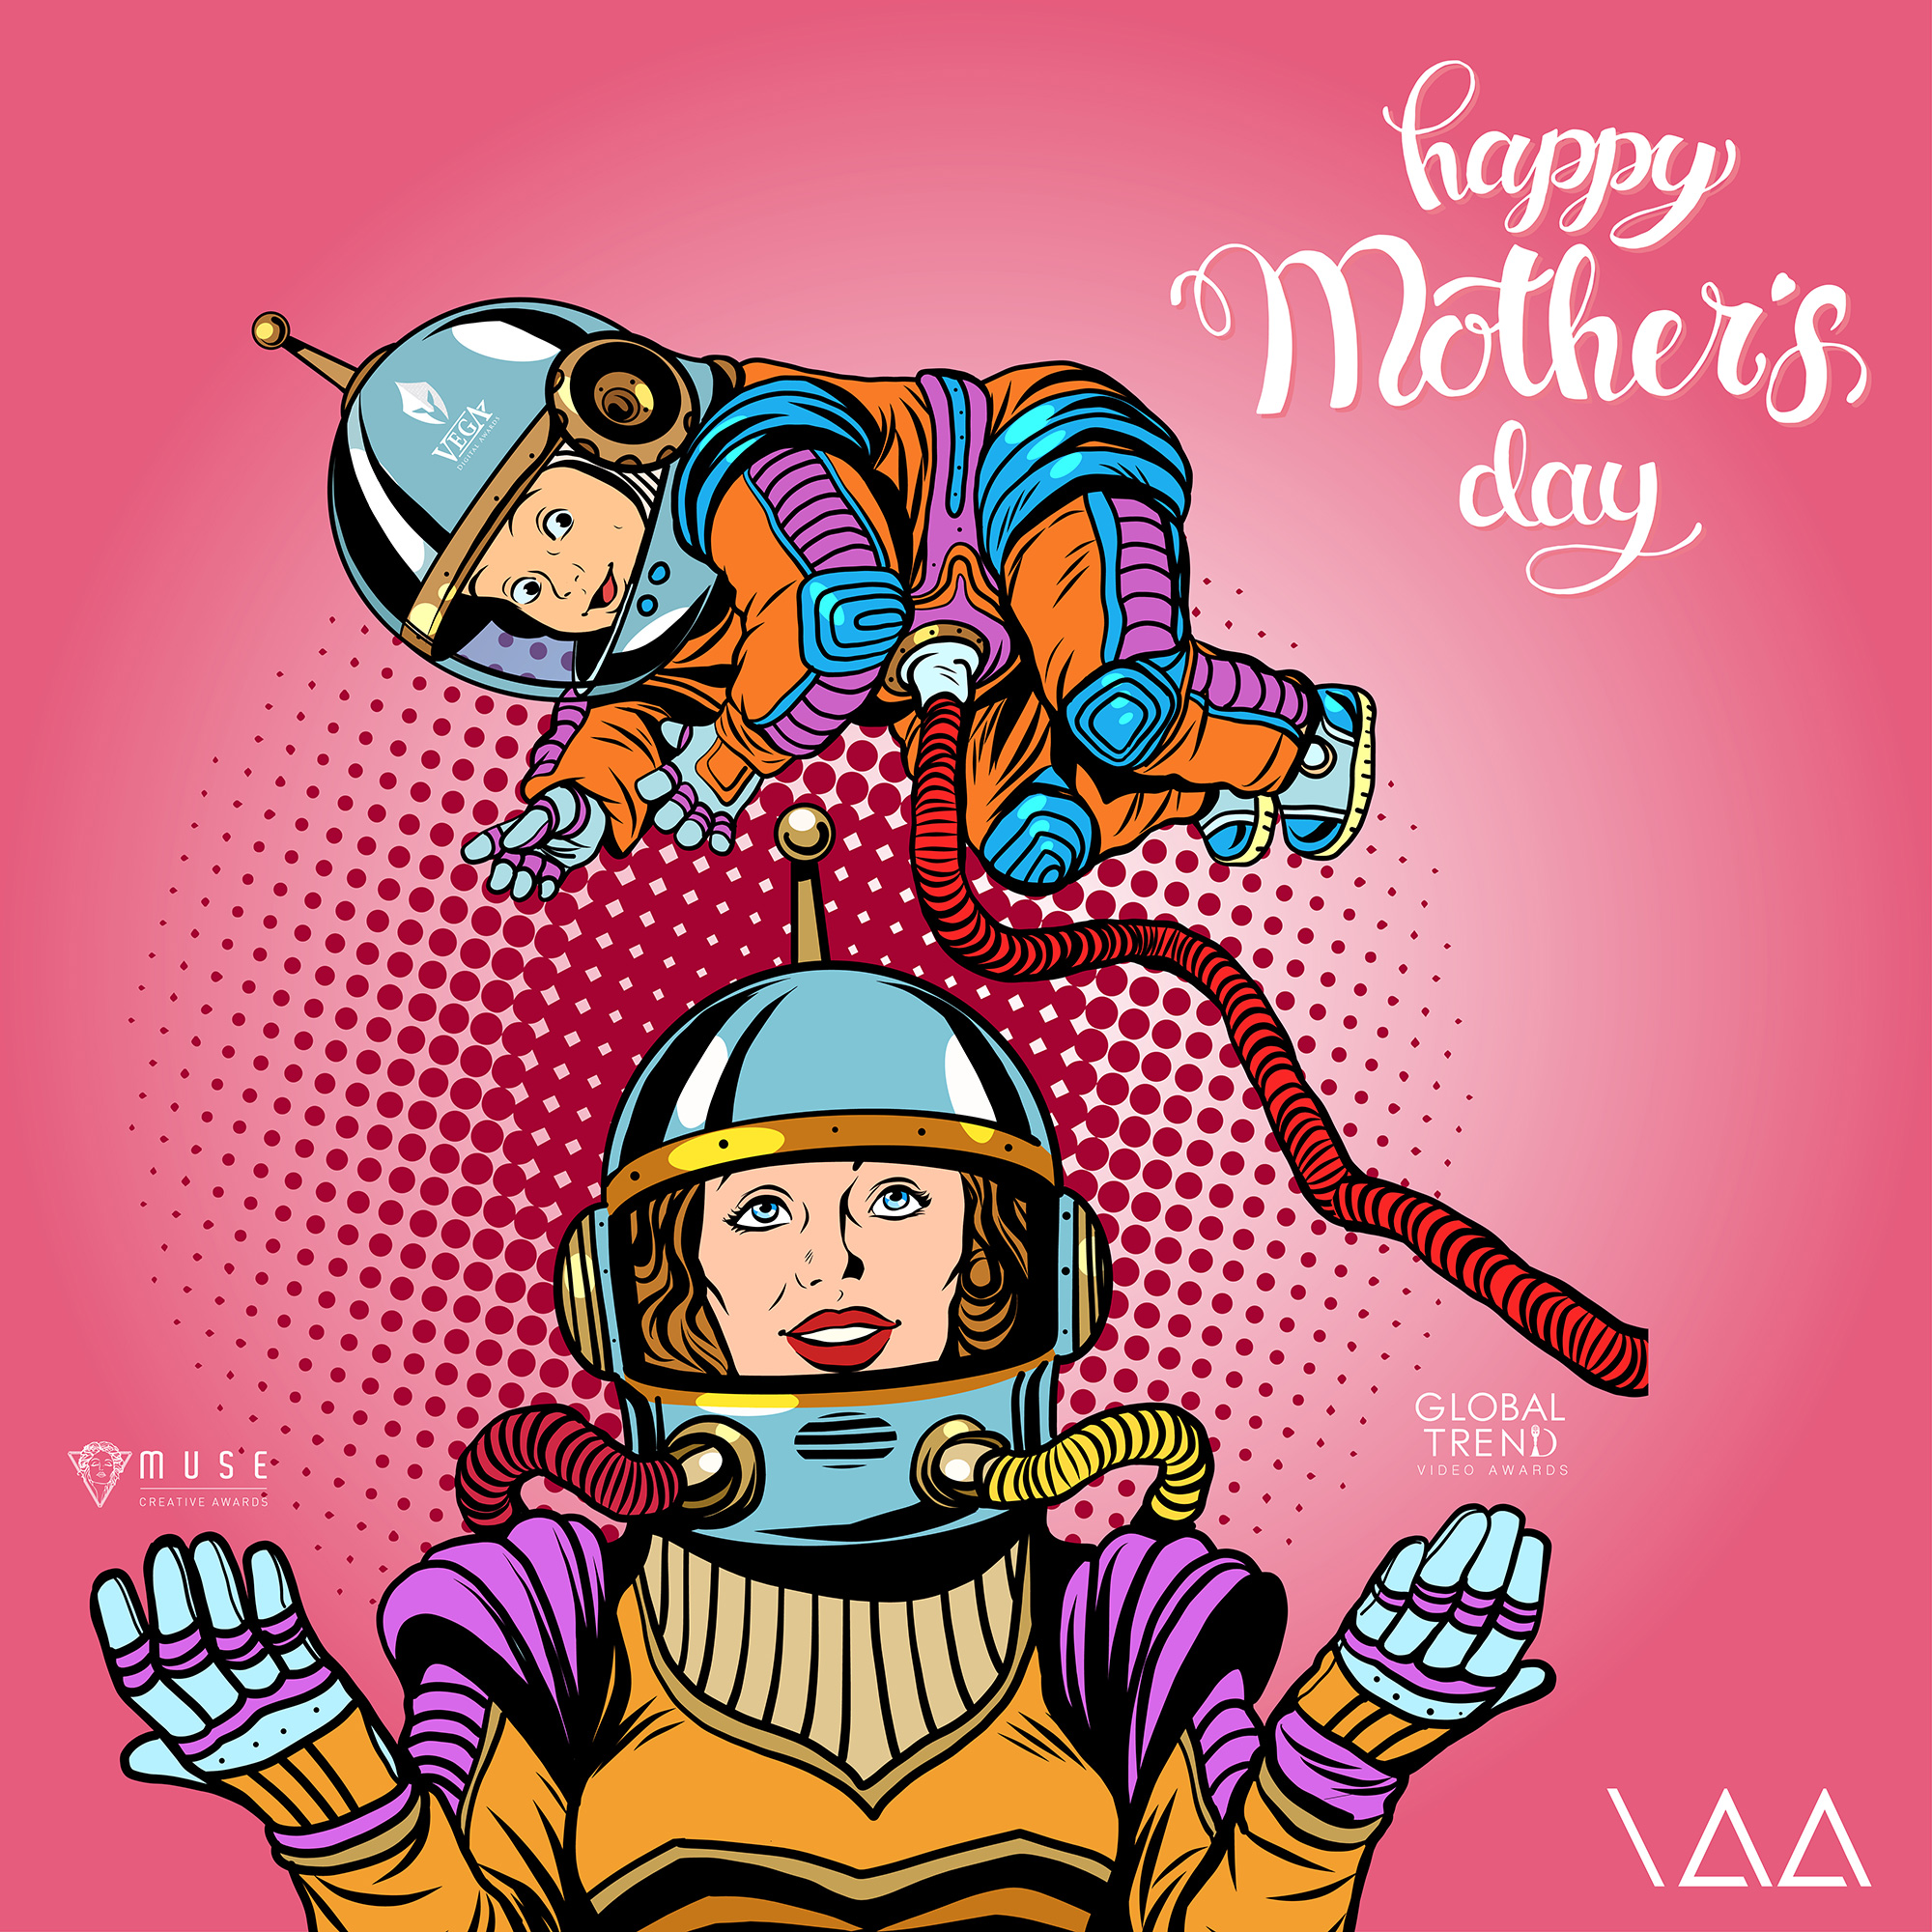 Happy Mother's Day from International Awards Associates (IAA) Team!